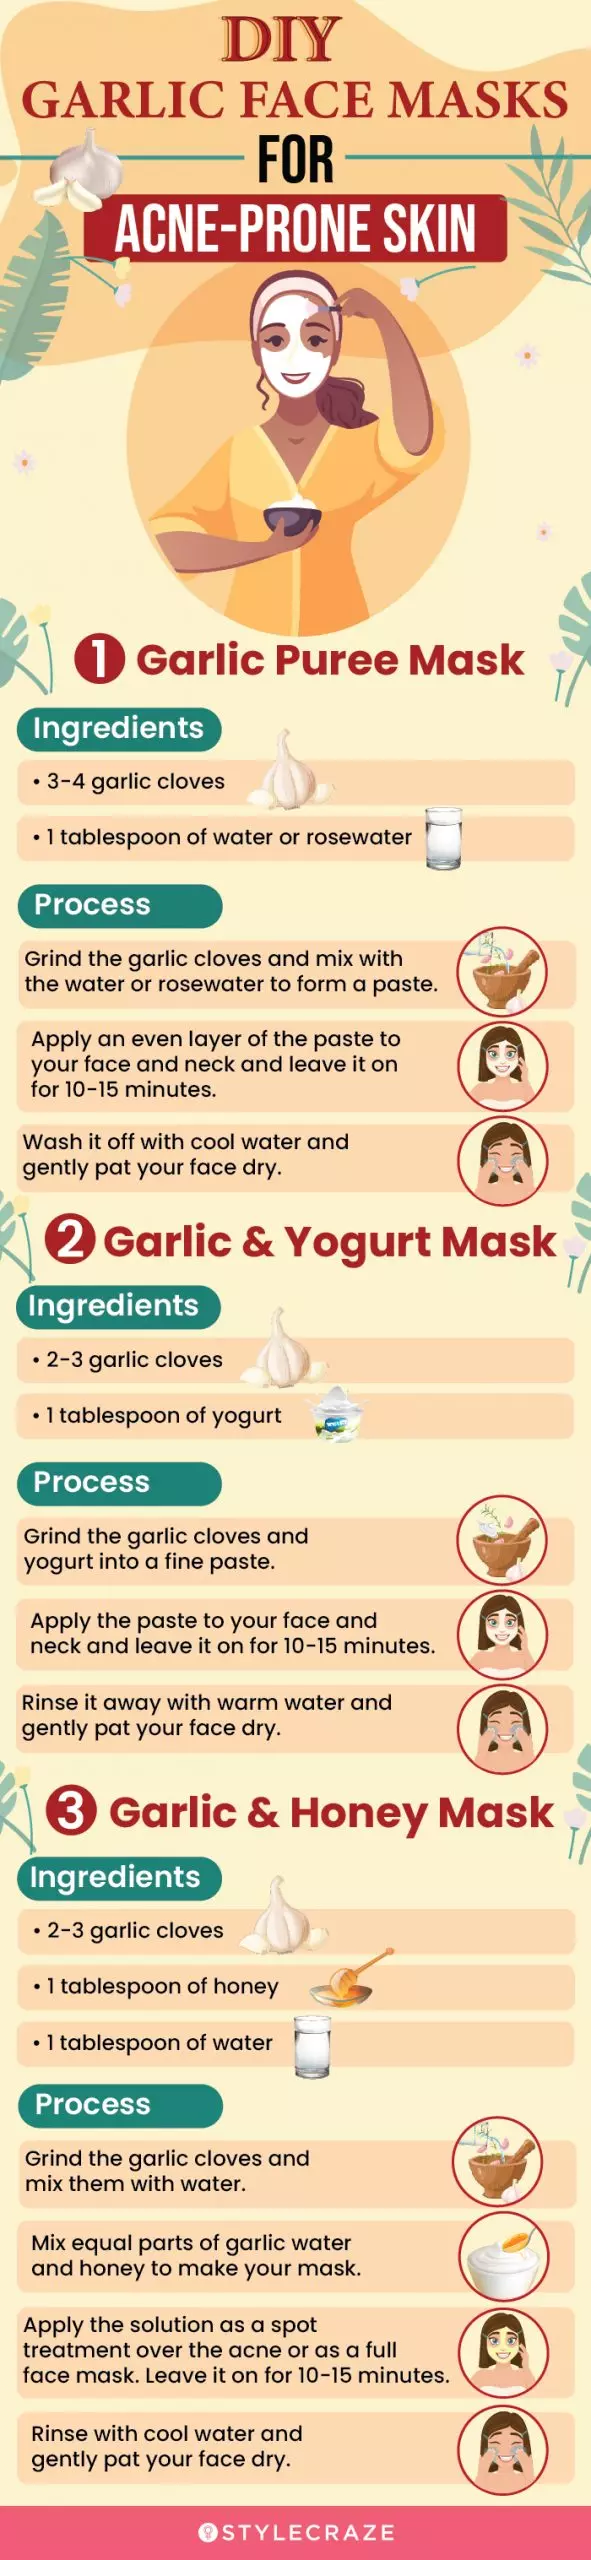 diy garlic face masks for acne-prone skin (infographic)